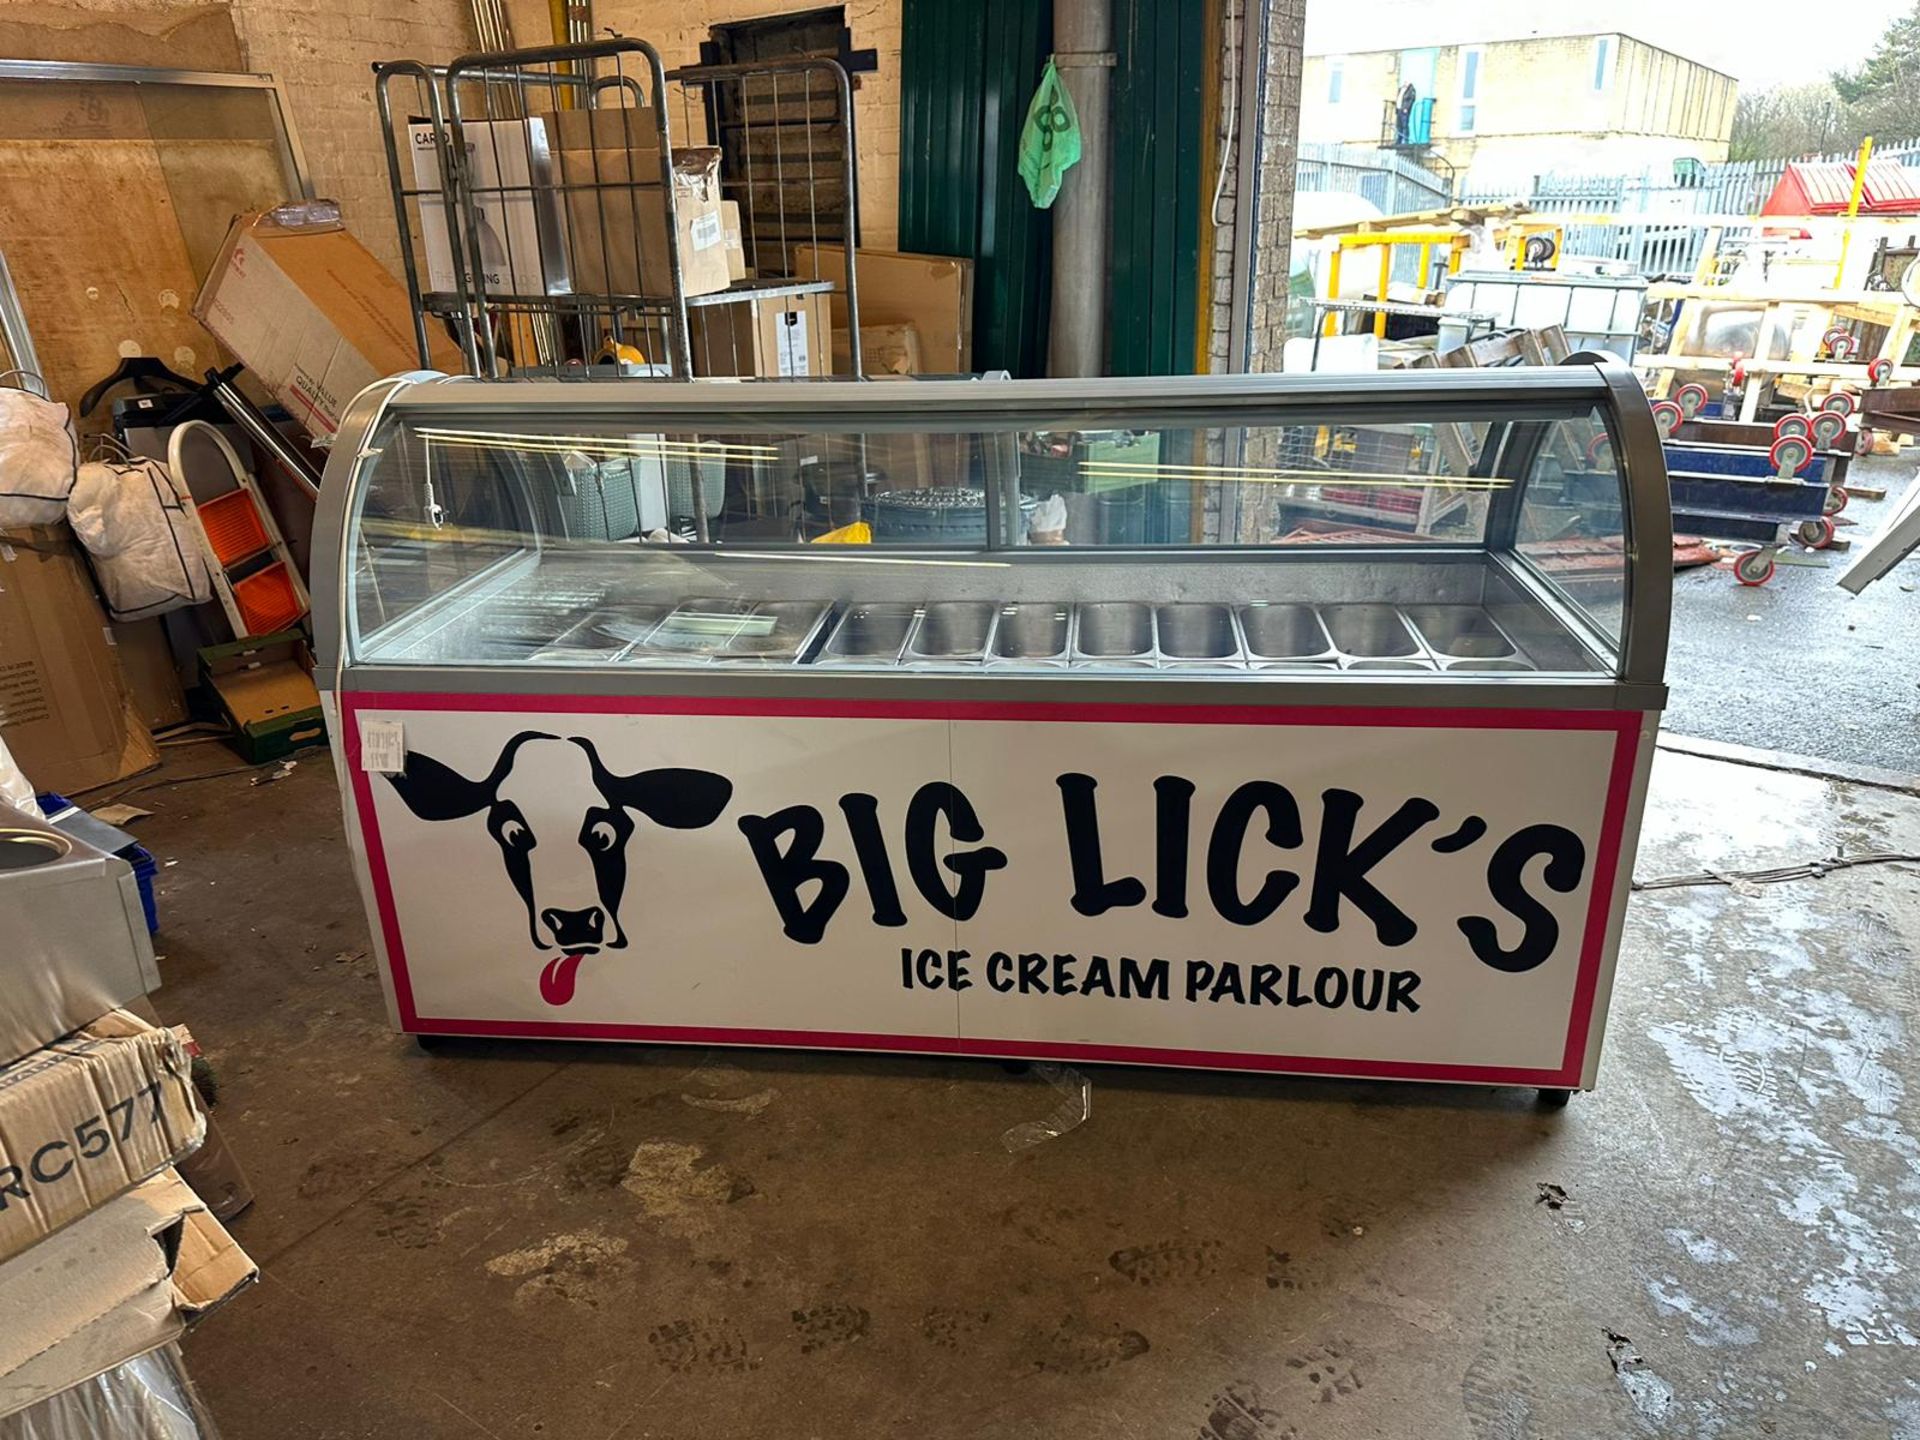 Big Licks Ice Cream Display Counter 2020, 2100 x 850 - Bild 2 aus 4